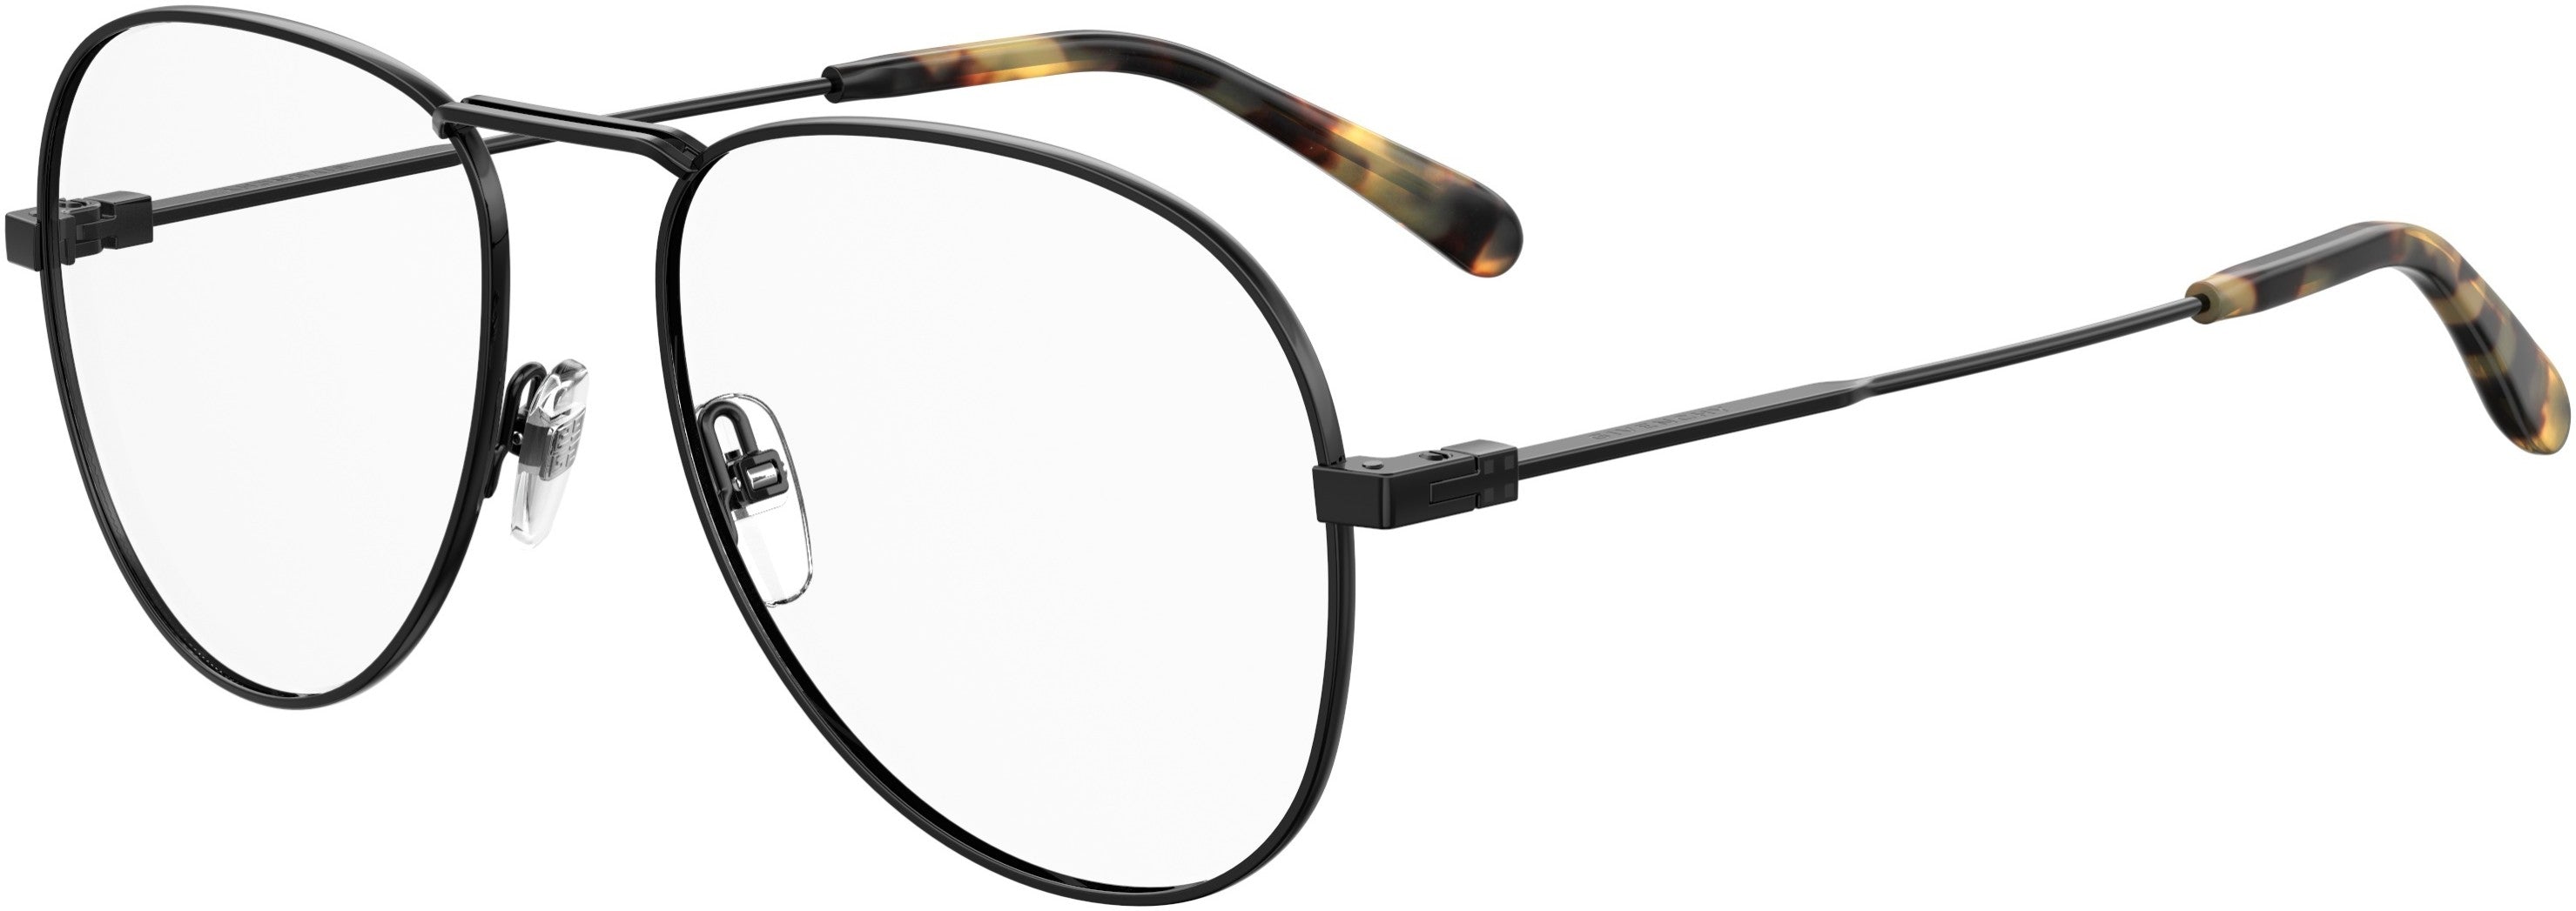  Givenchy 0117 Aviator Eyeglasses 0807-0807  Black (00 Demo Lens)